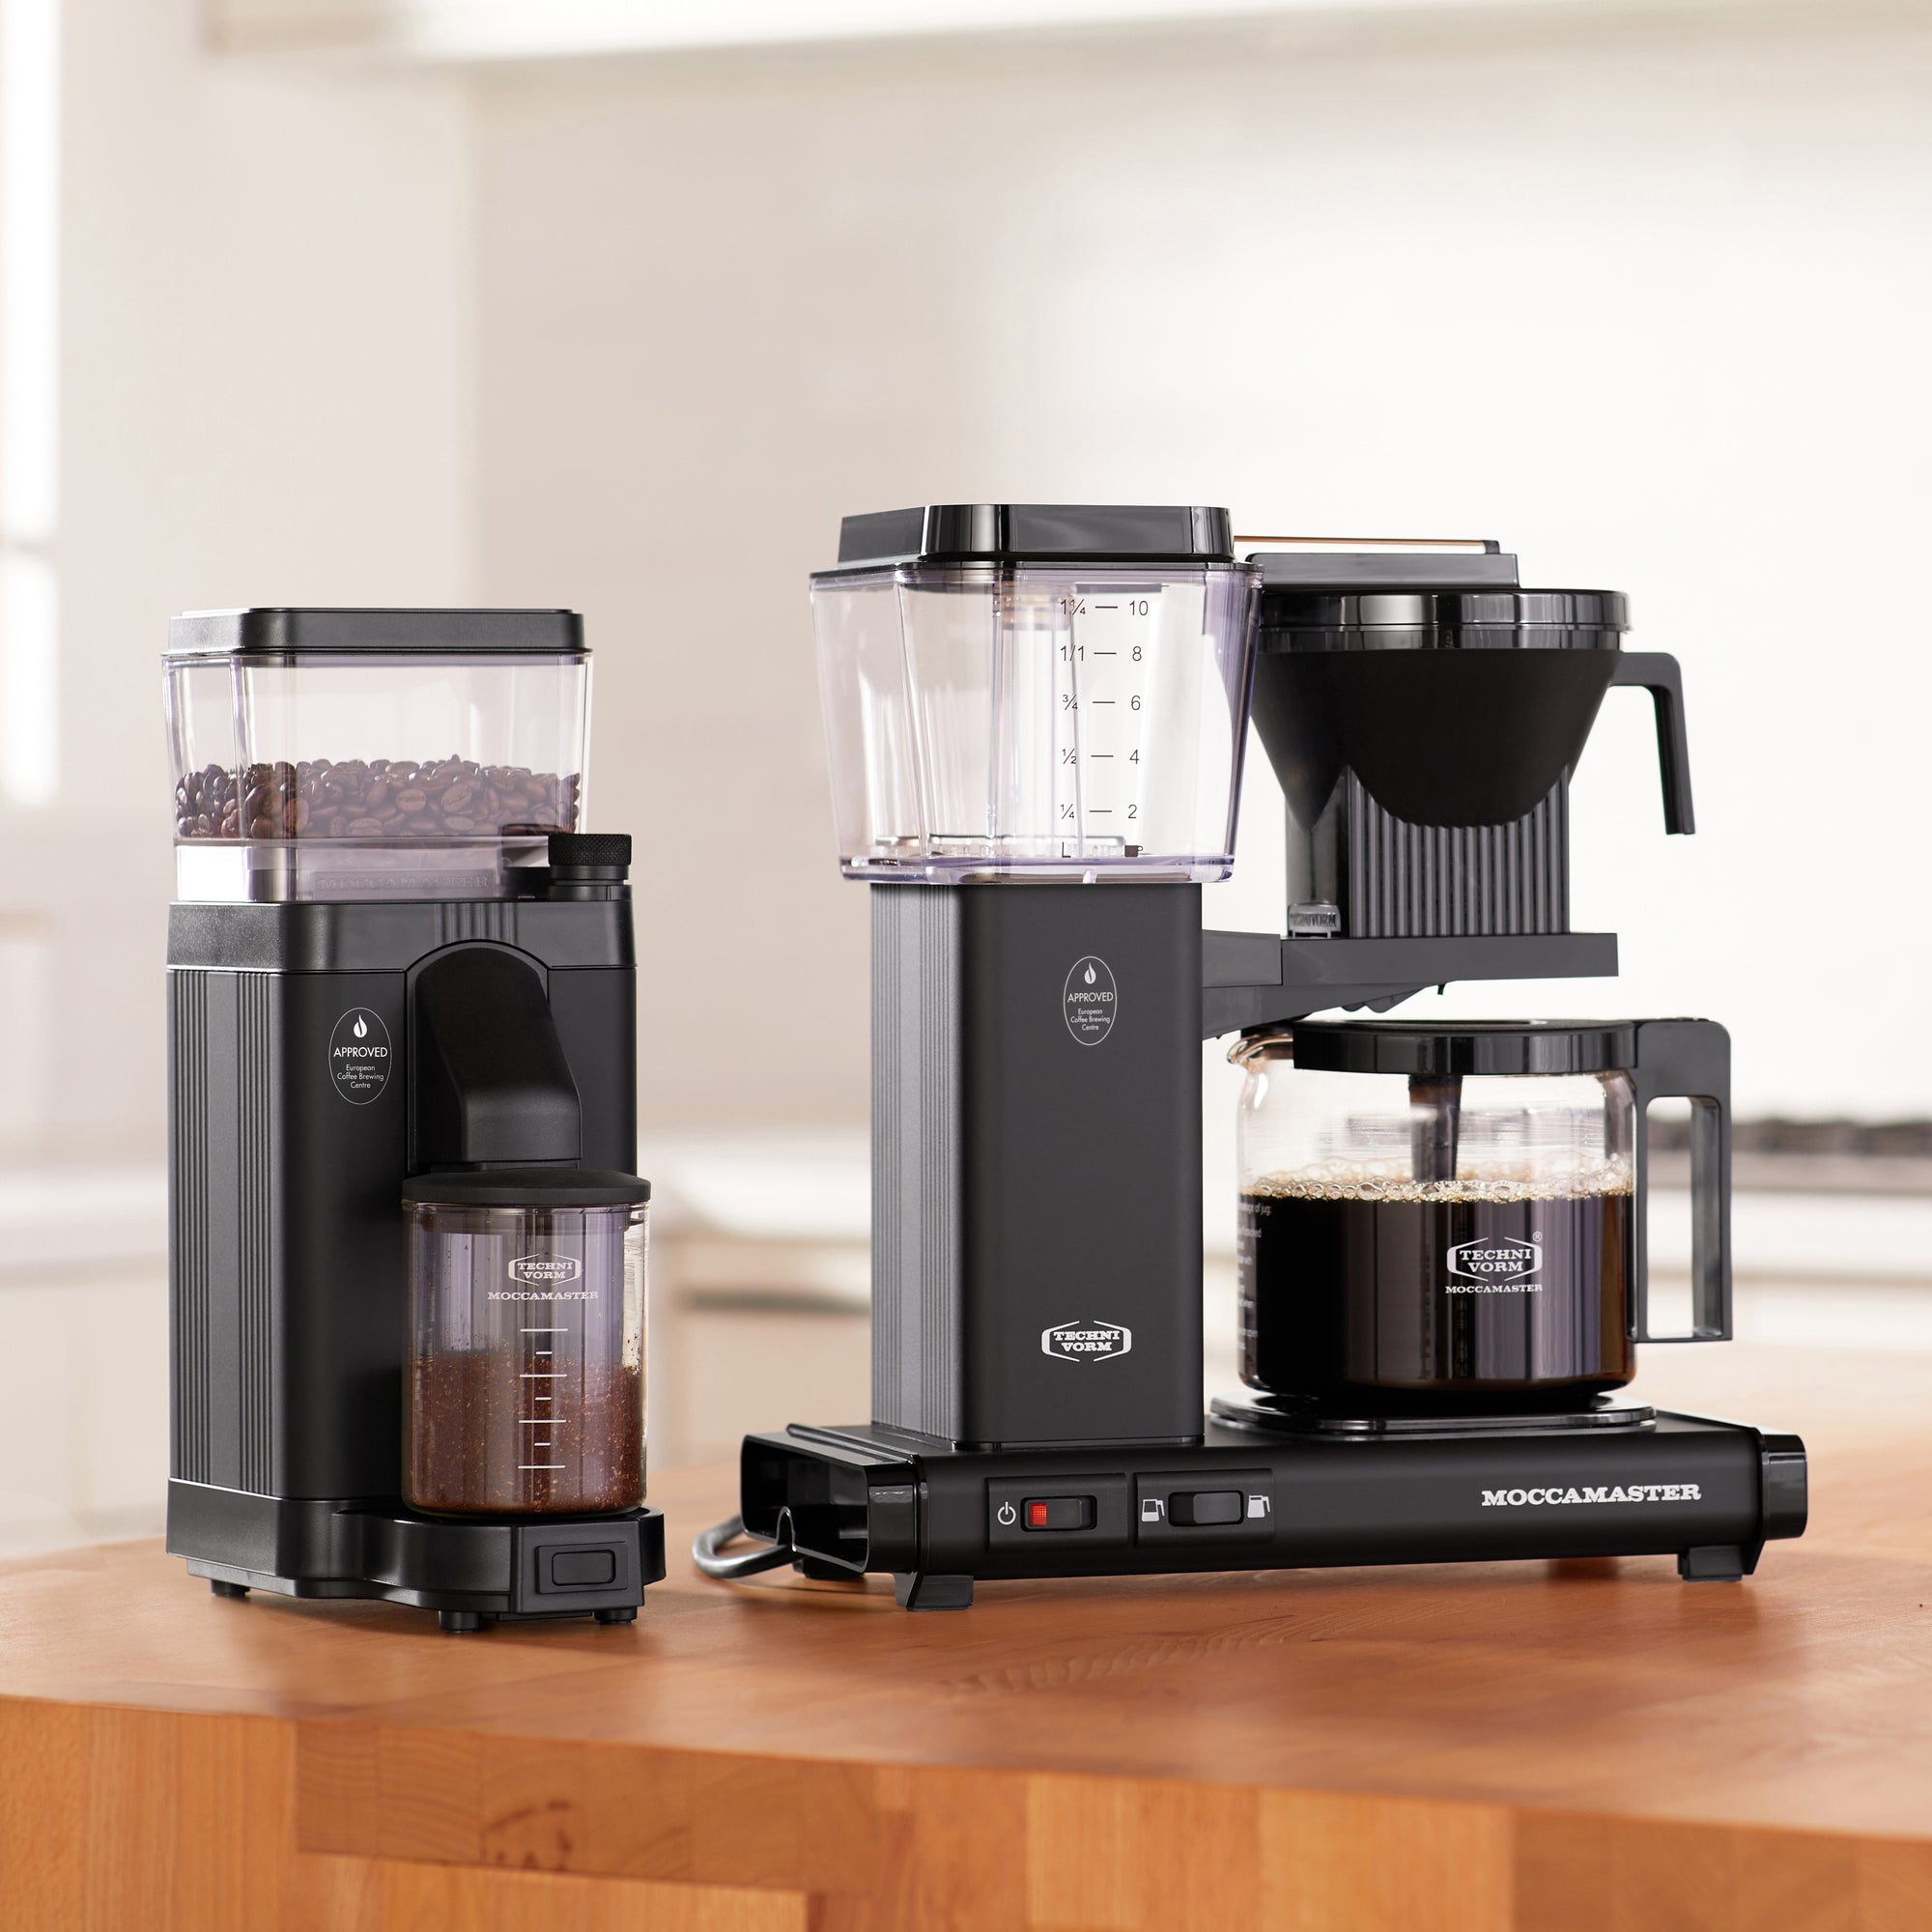 Black coffee grinder and coffee brewer